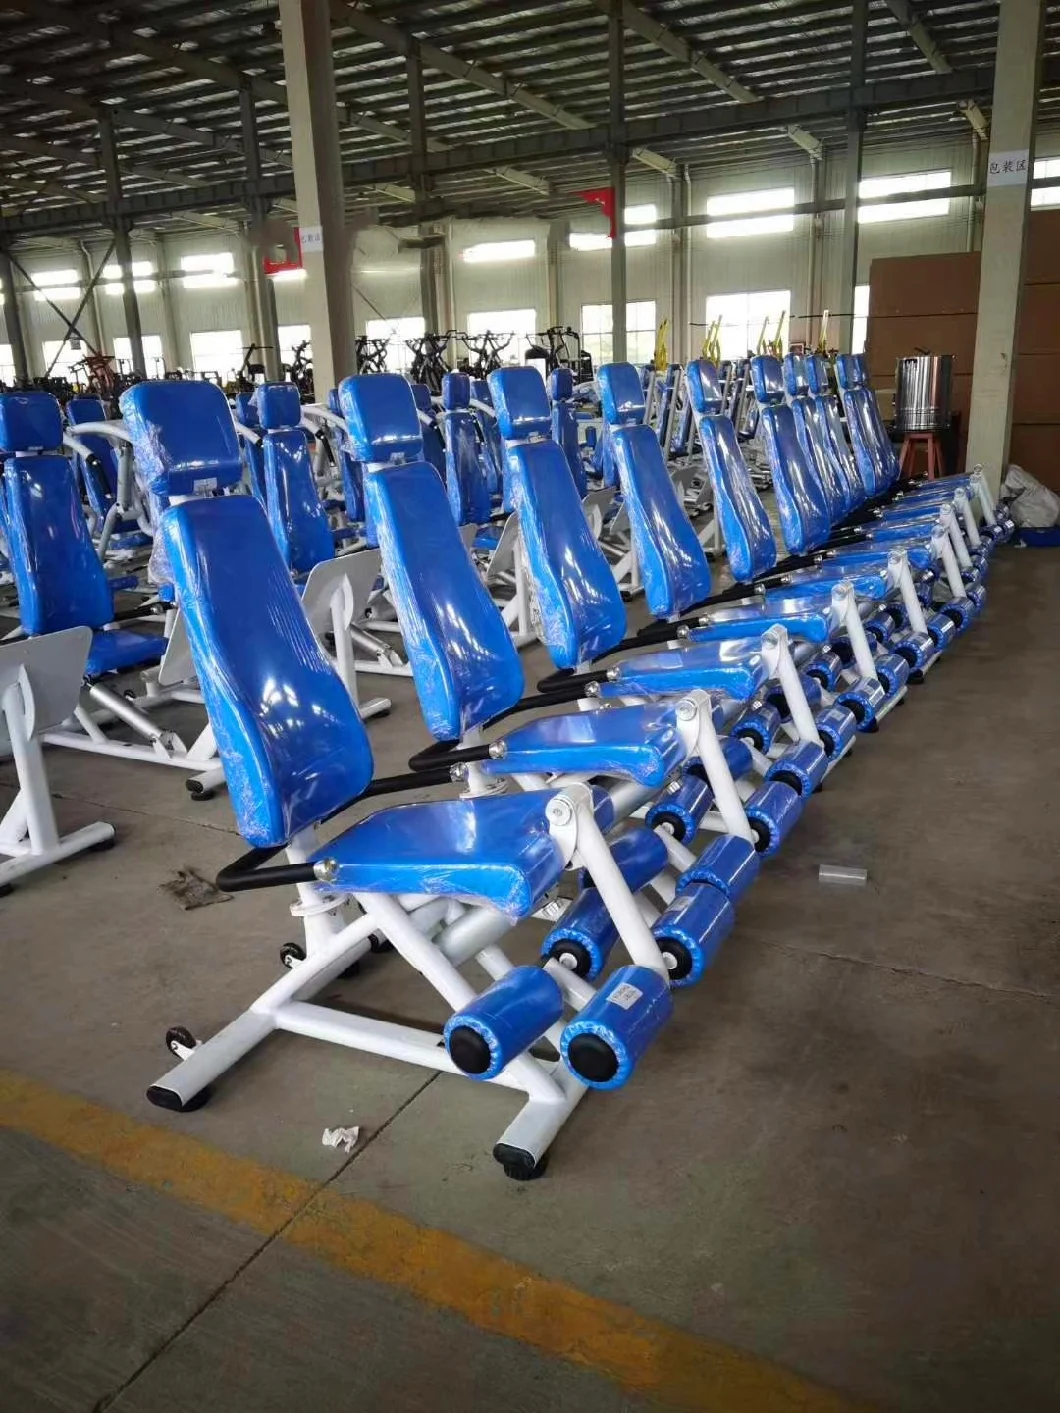 Commercial Strength Gym Equipment Hydraulic Circuit Training Machine Leg Extension/Leg Curl Th-05